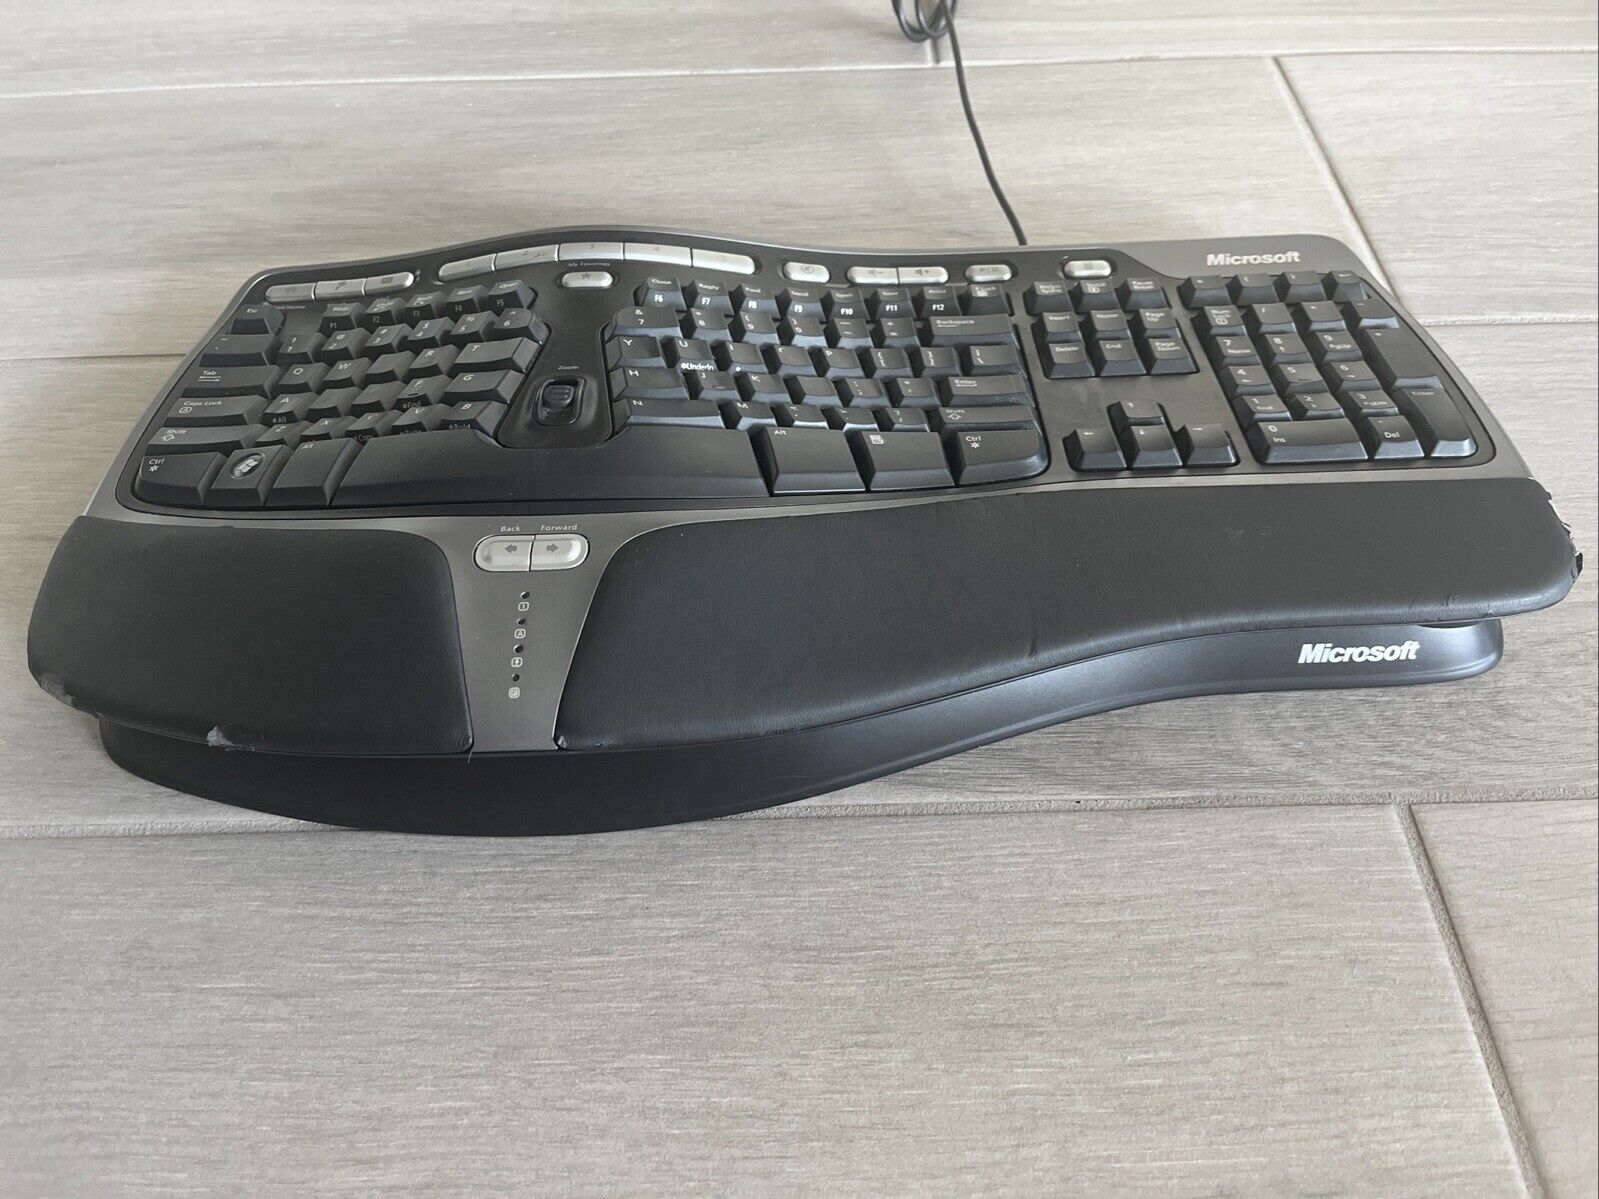 Microsoft Natural Ergonomic Keyboard 4000 V1.0 KU-0462 Black Wired USB Tested